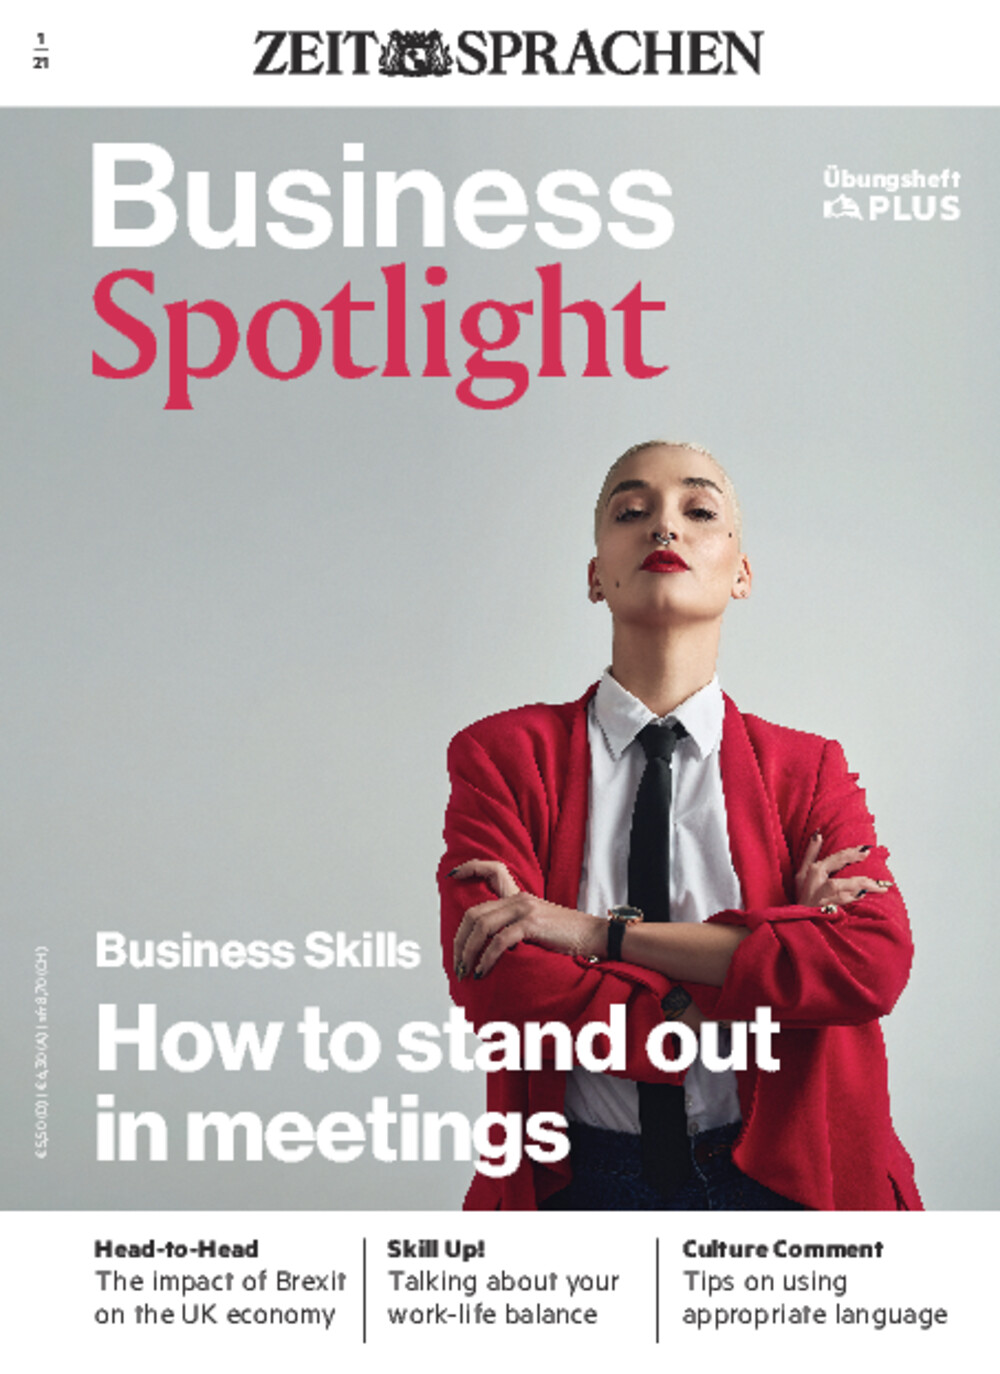 Business Spotlight Übungsheft Digital 01/2021